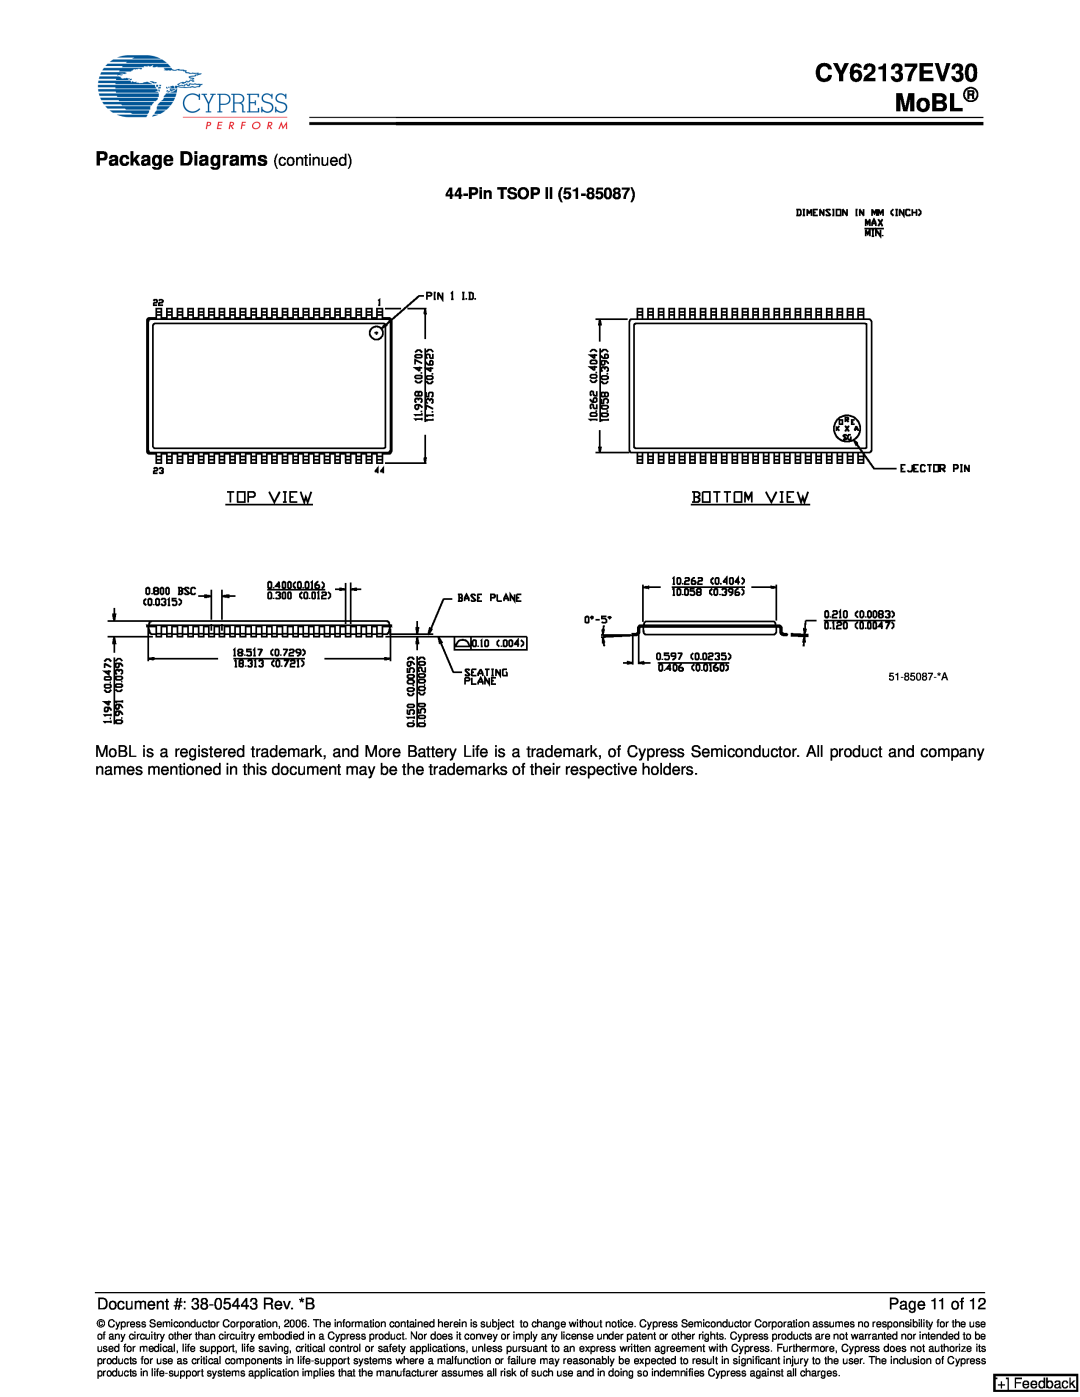 Cypress manual Package Diagrams continued, CY62137EV30 MoBL, Pin TSOP, + Feedback 